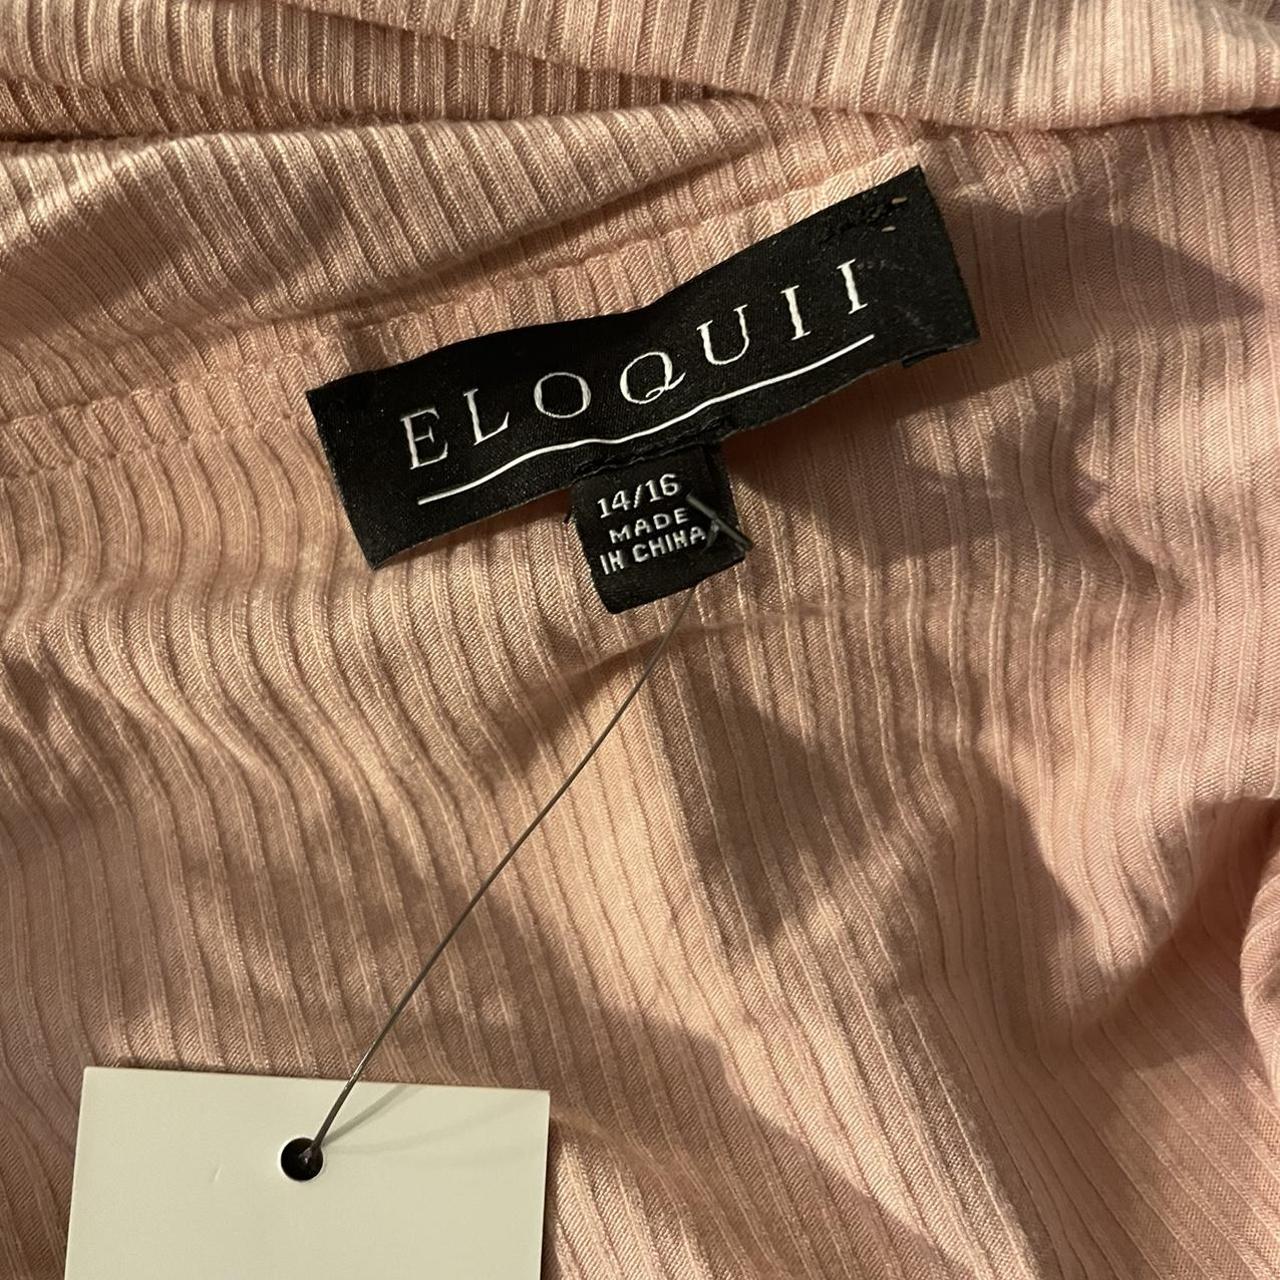 Product Image 4 - Off shoulder crop
Long sleeves
ELOQUII brand